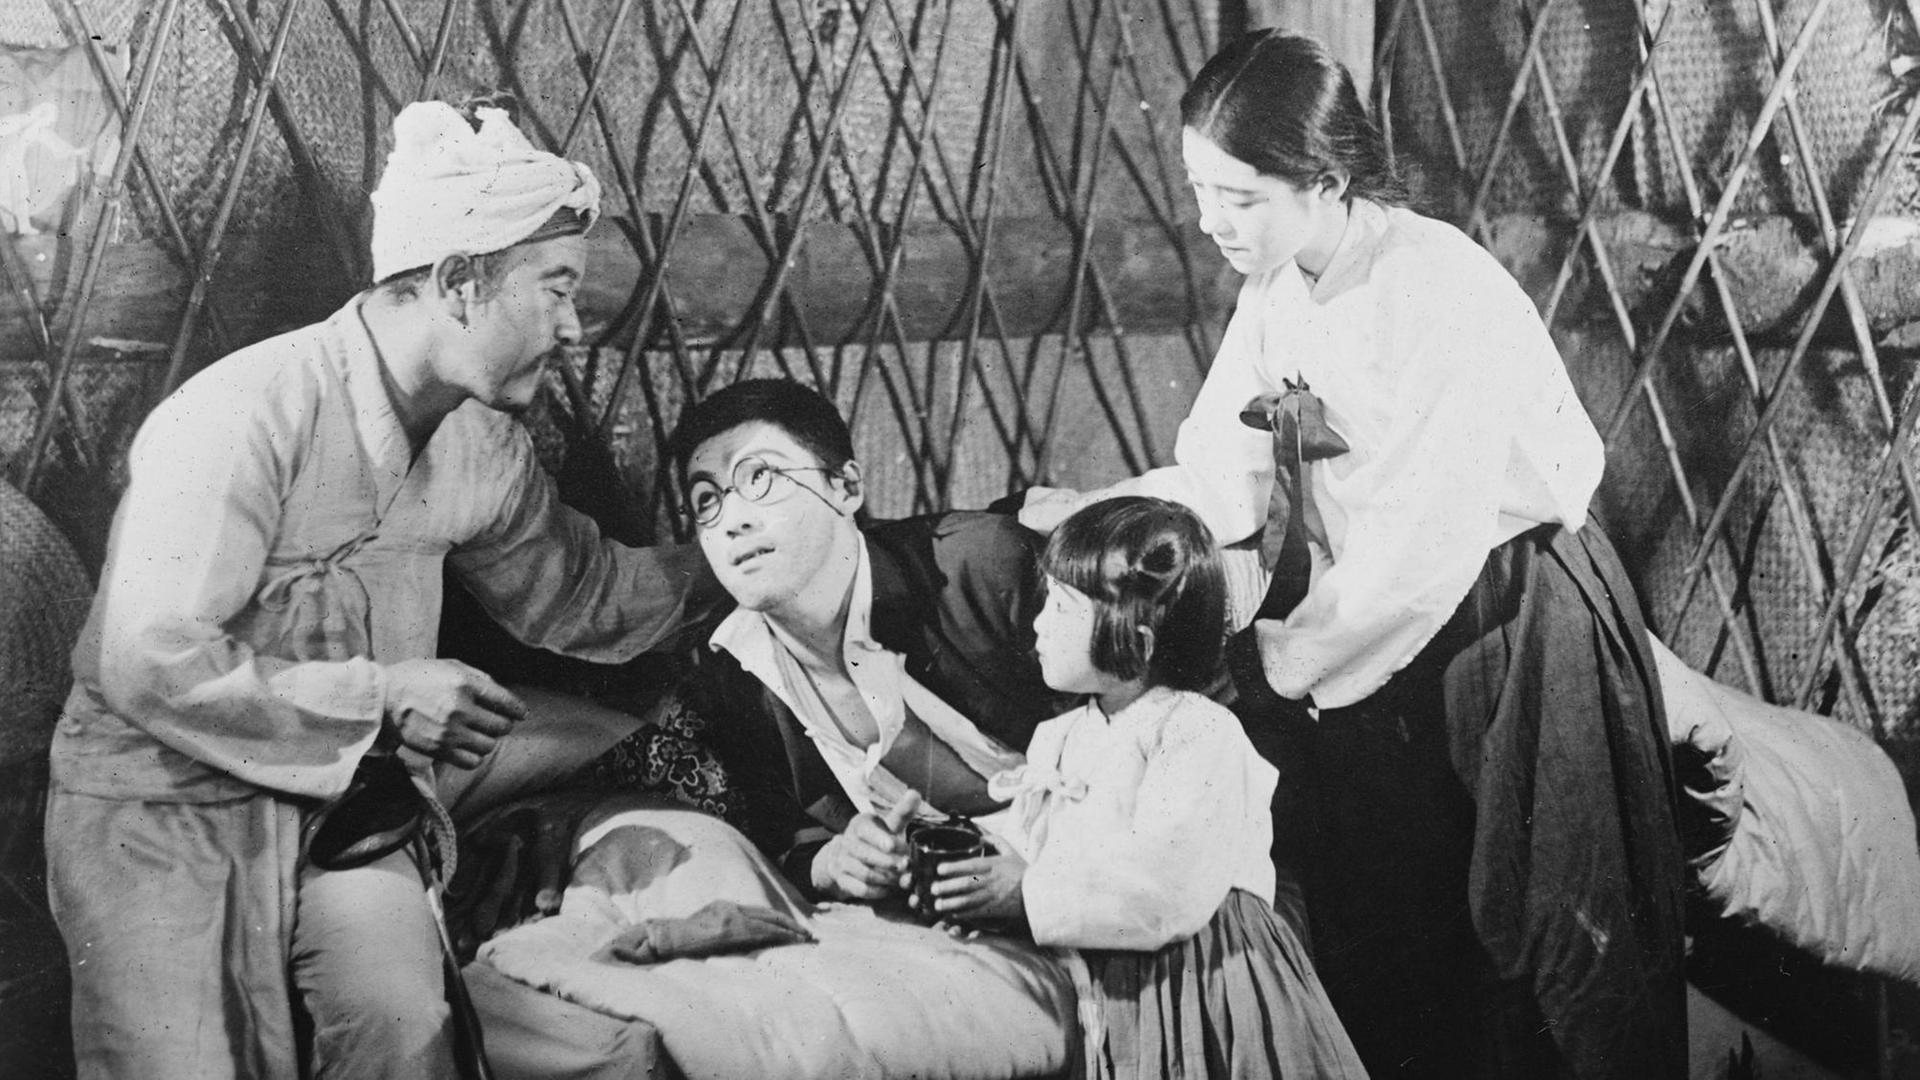 Szene aus einem japanischen Stummfilm, etwa 1926 mit T. Yoshida, K. Fujima and R. Sawa.